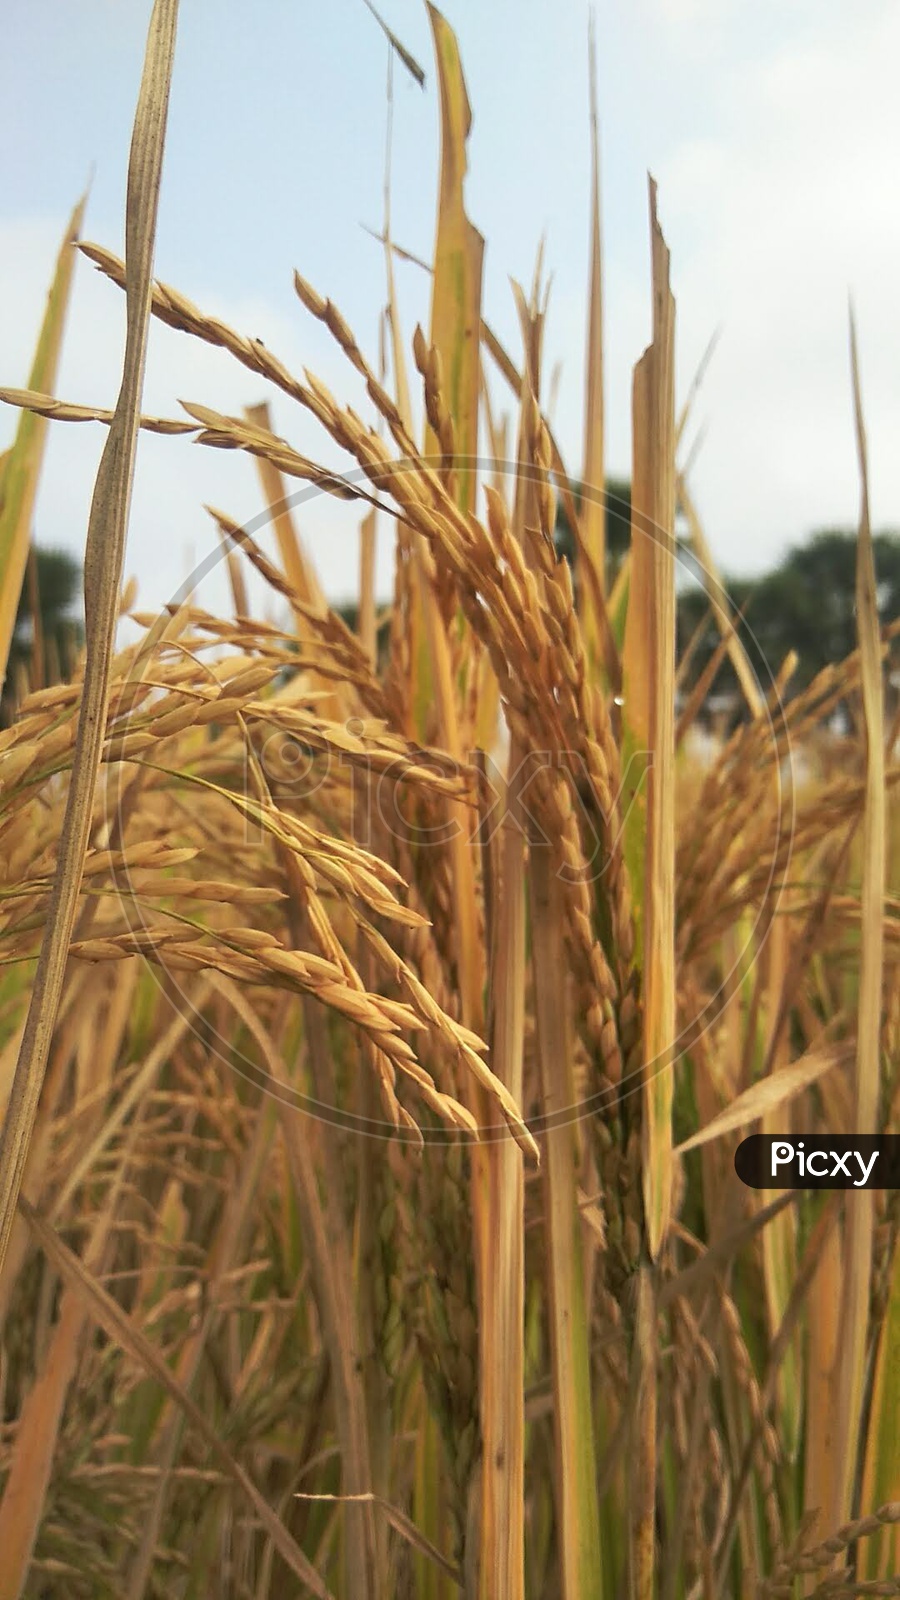 Paddy(rice) crop